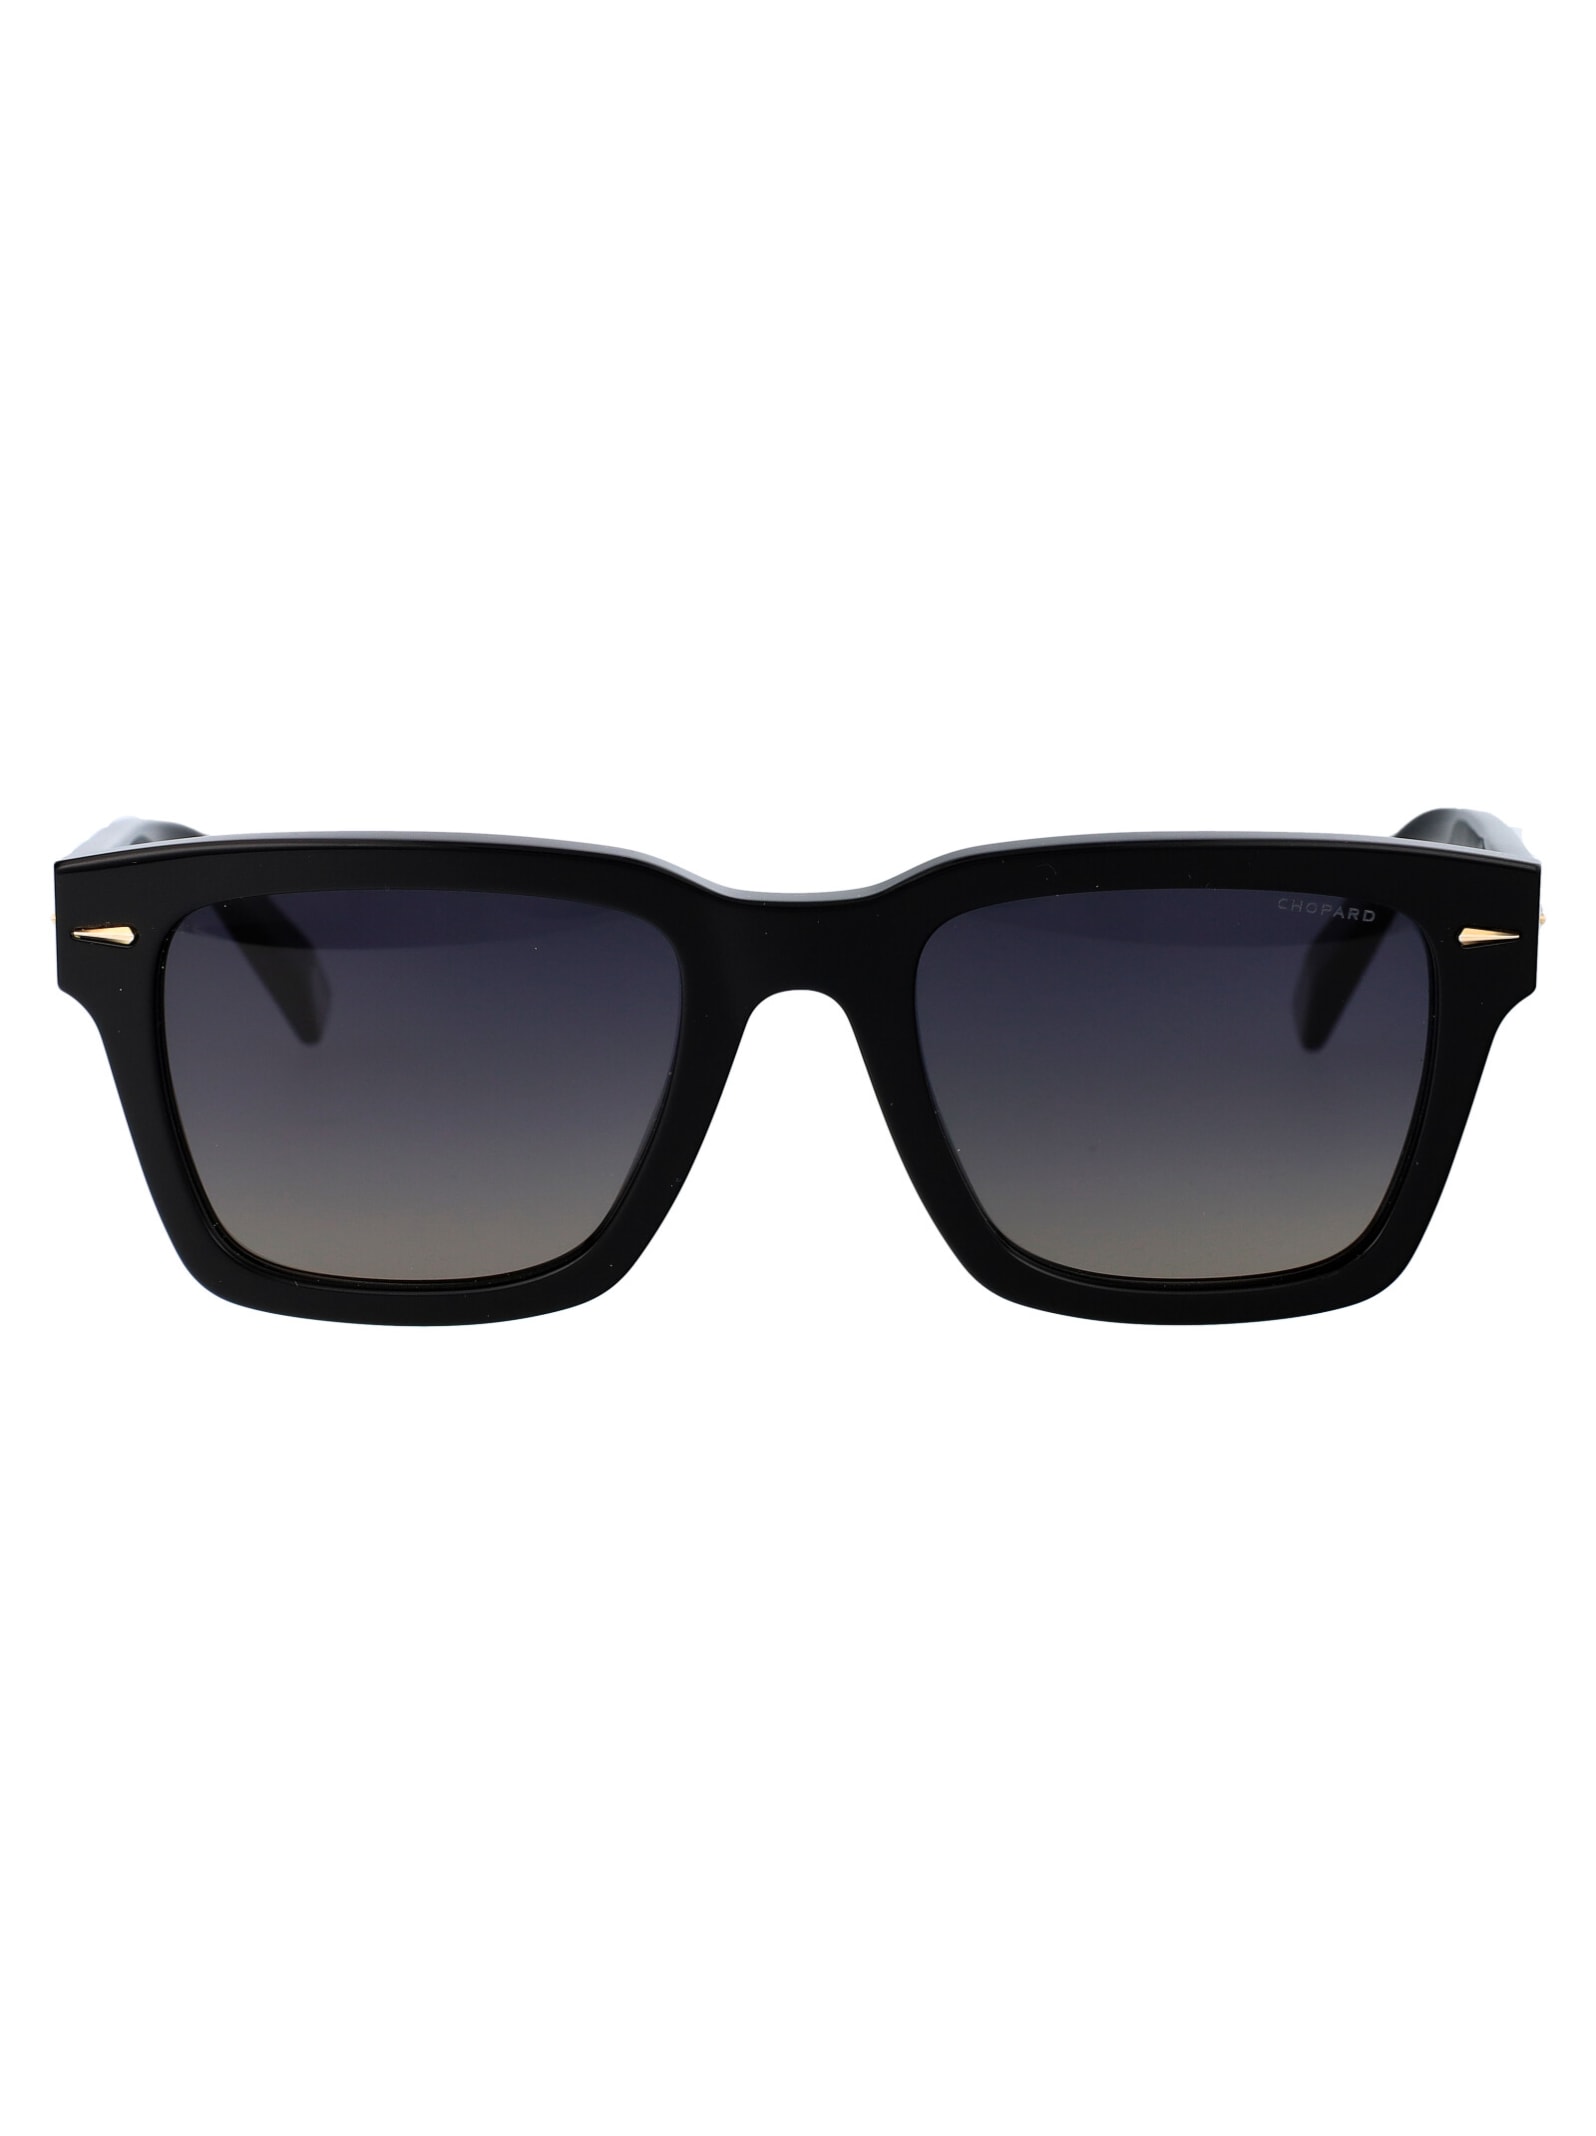 Sch337 Sunglasses